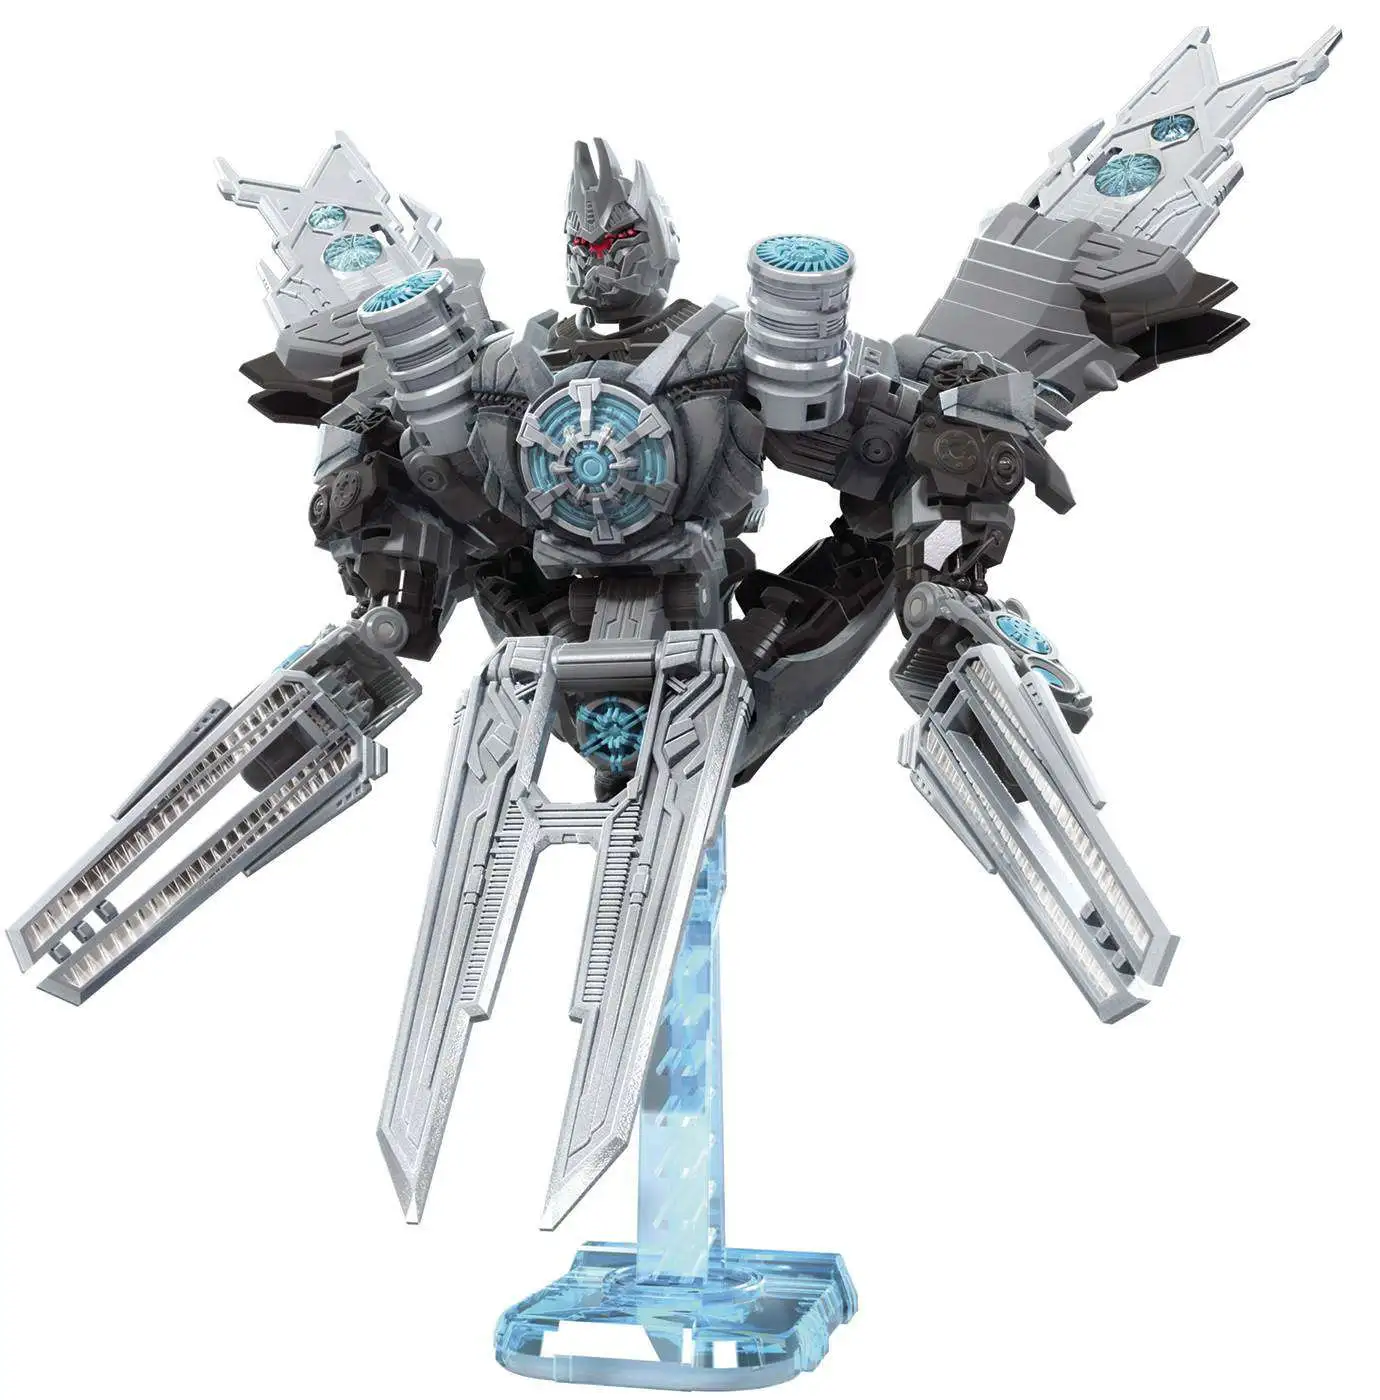 Revenge of the Fallen Soundwave Action Figure for sale online Hasbro Transformers 